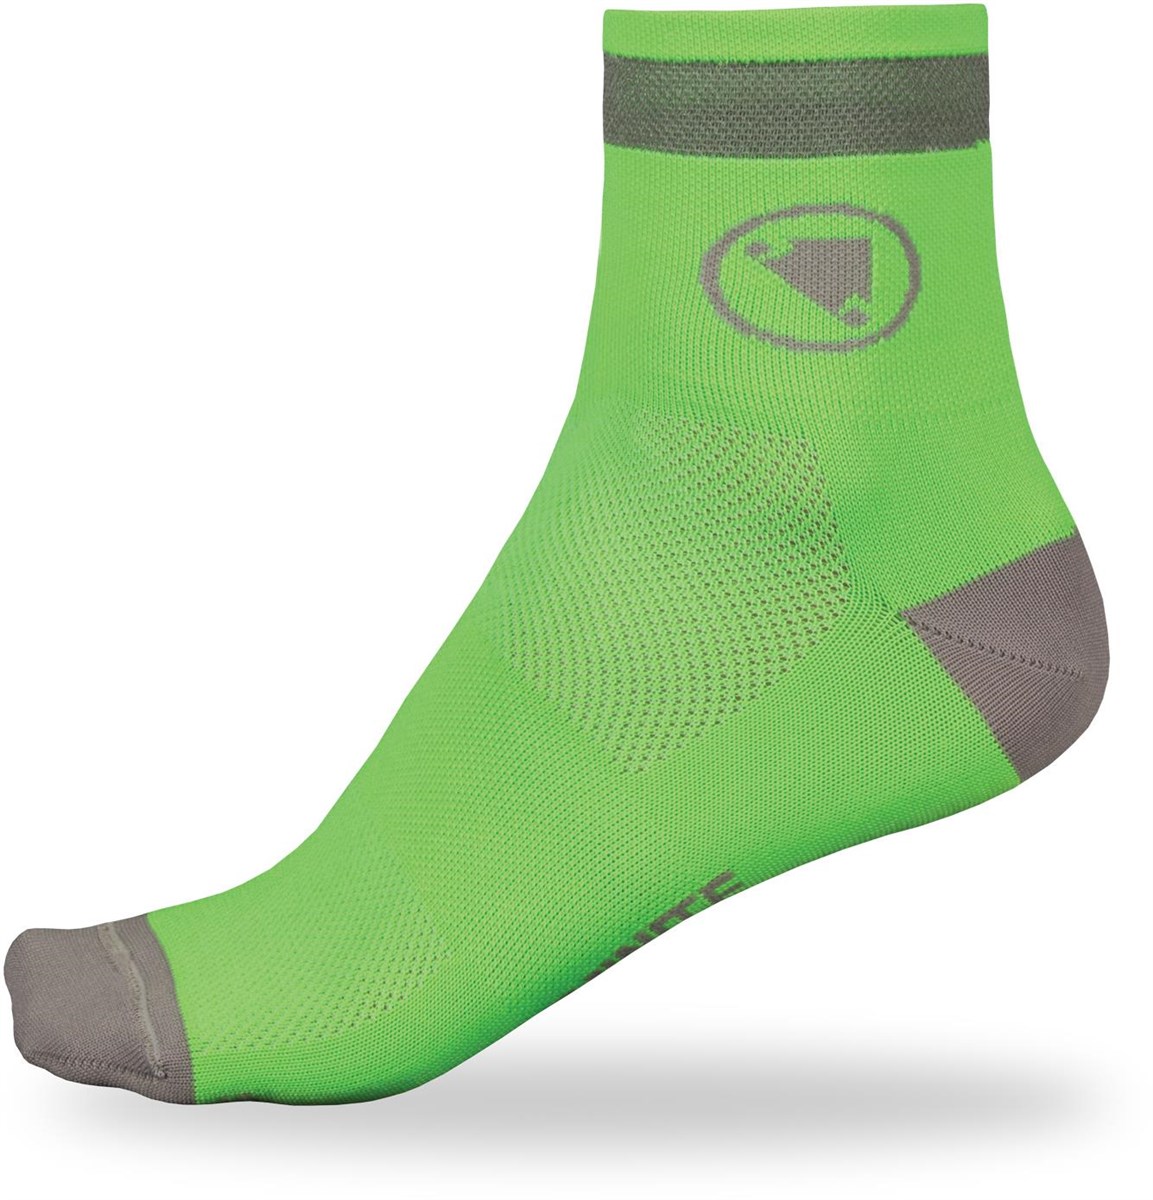 Endura Luminite Cycling Socks - Twin Pack product image